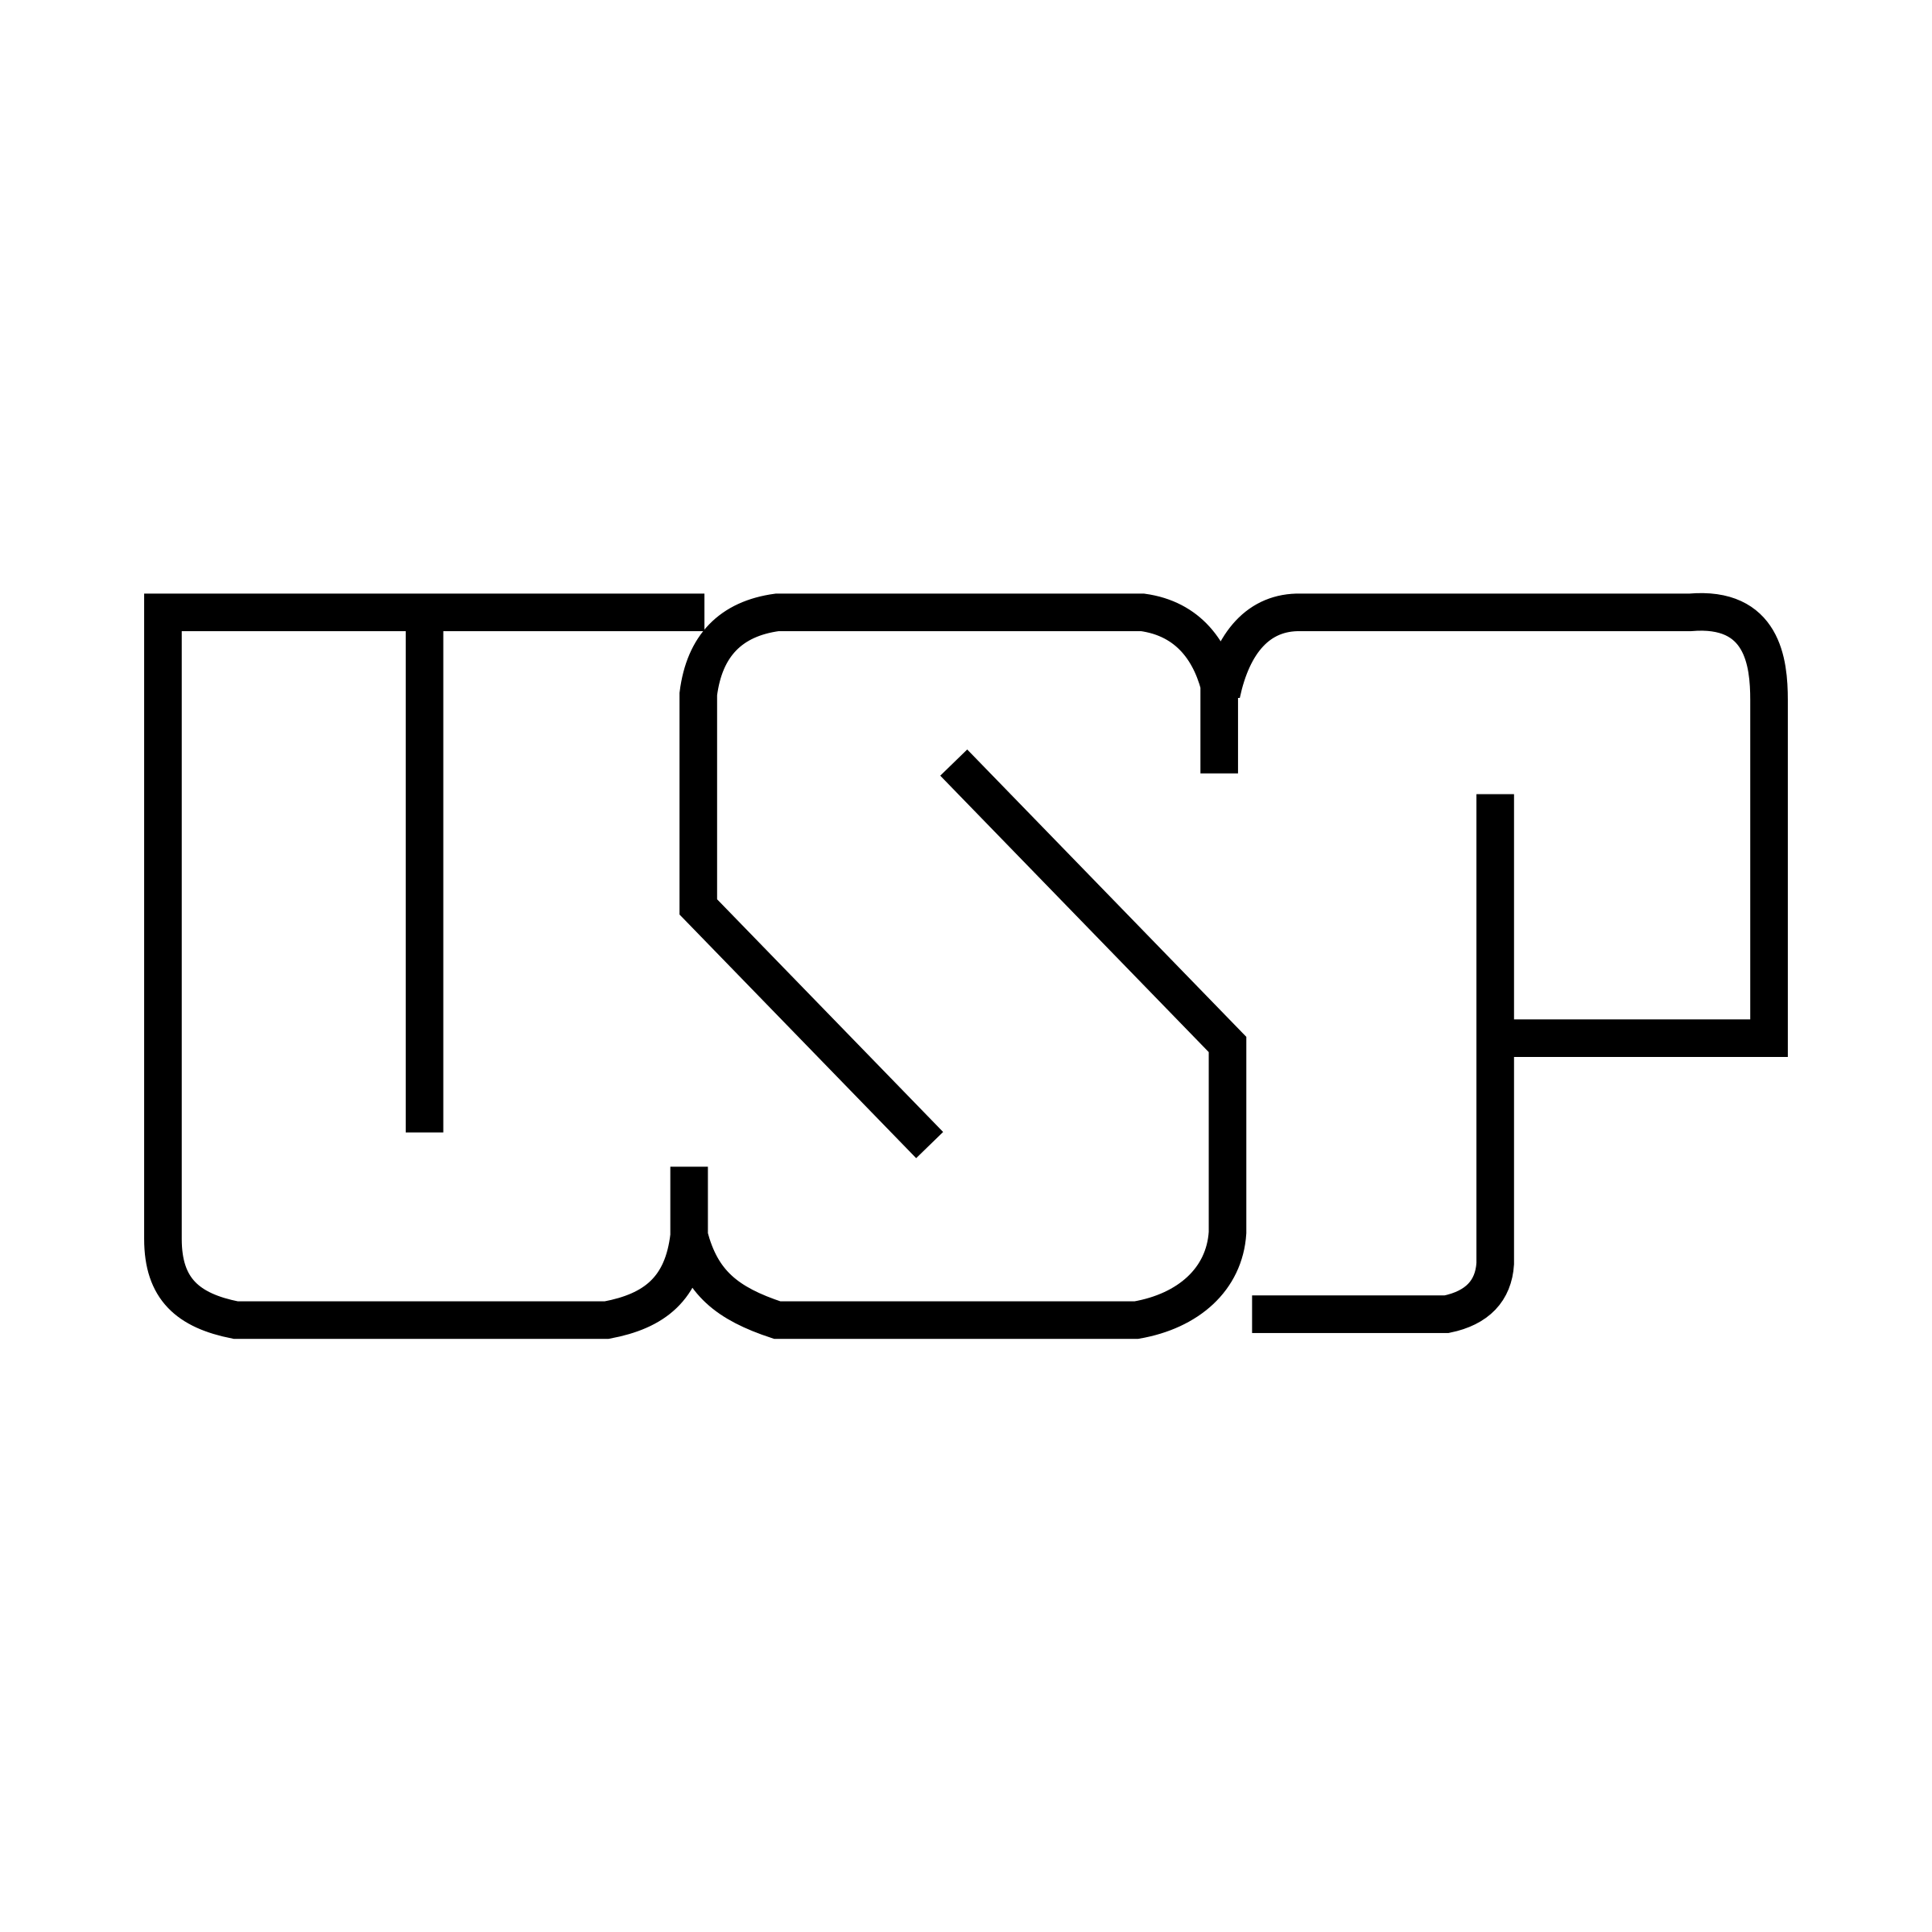 USP Logo - USP Logo PNG Transparent & SVG Vector - Freebie Supply